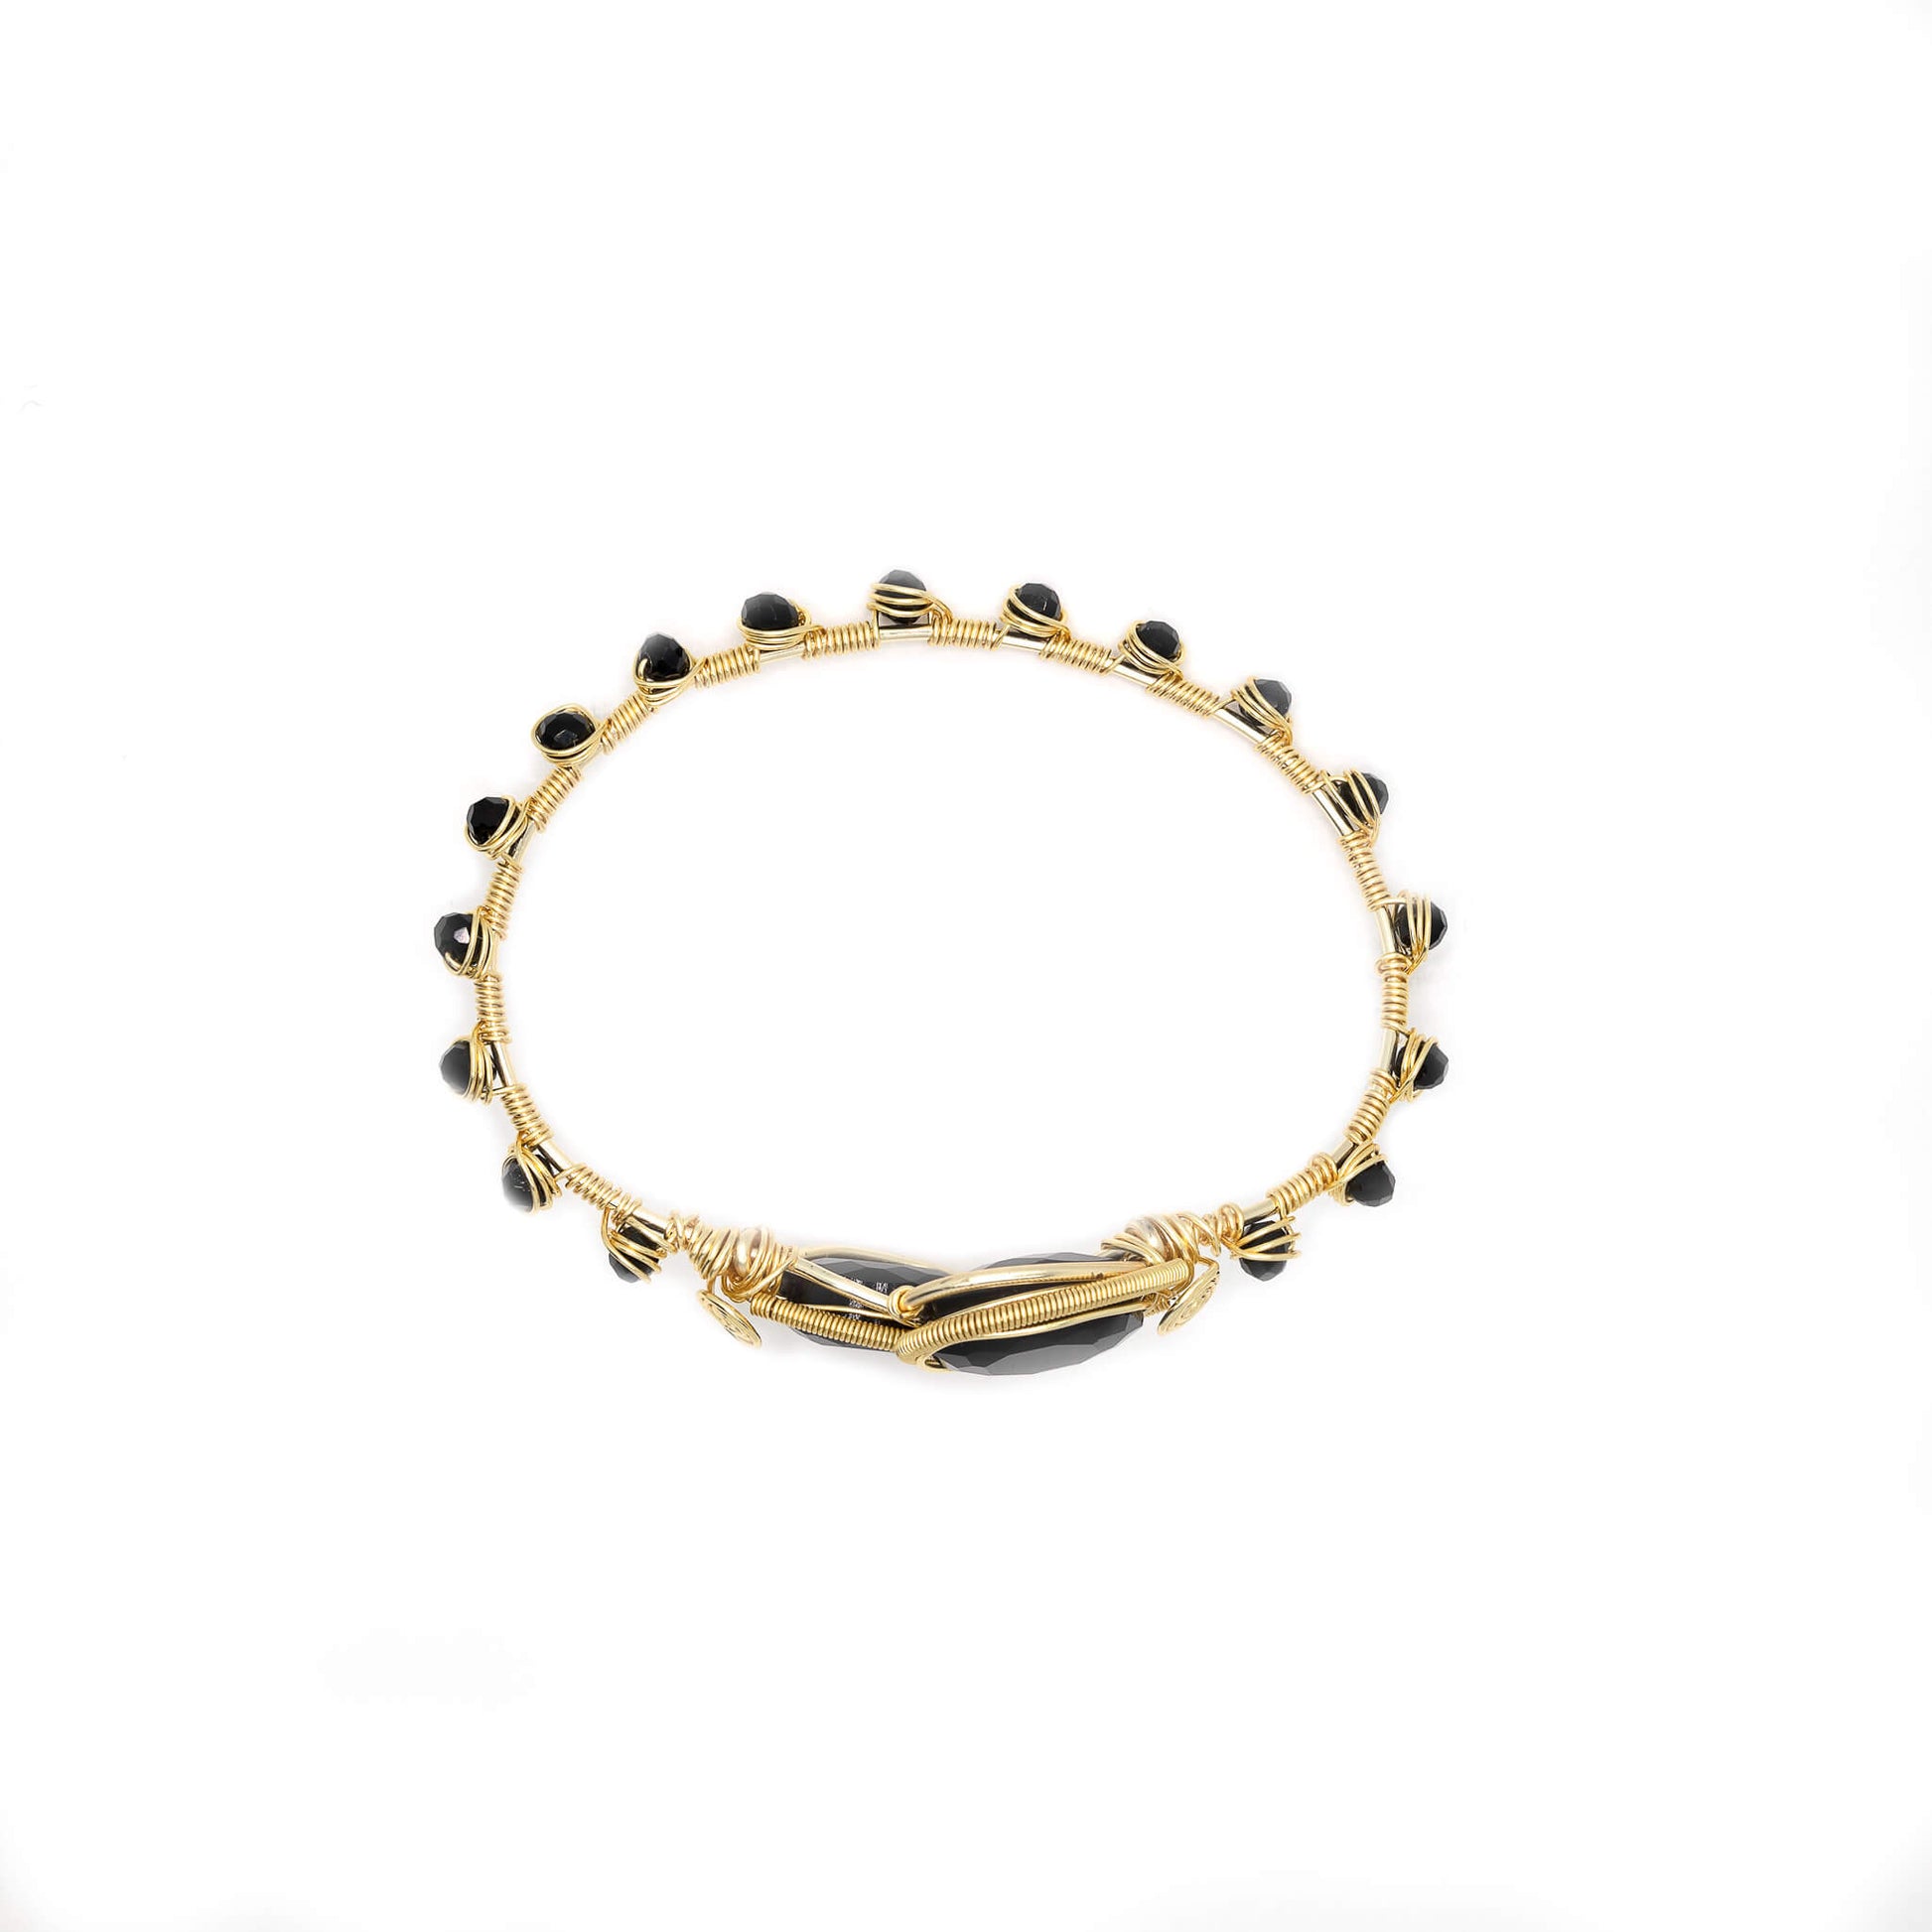 Neuss Bracelet. Gold Color  Bracelet with Black beads crystals. Wire wrapped bracelet (flat).